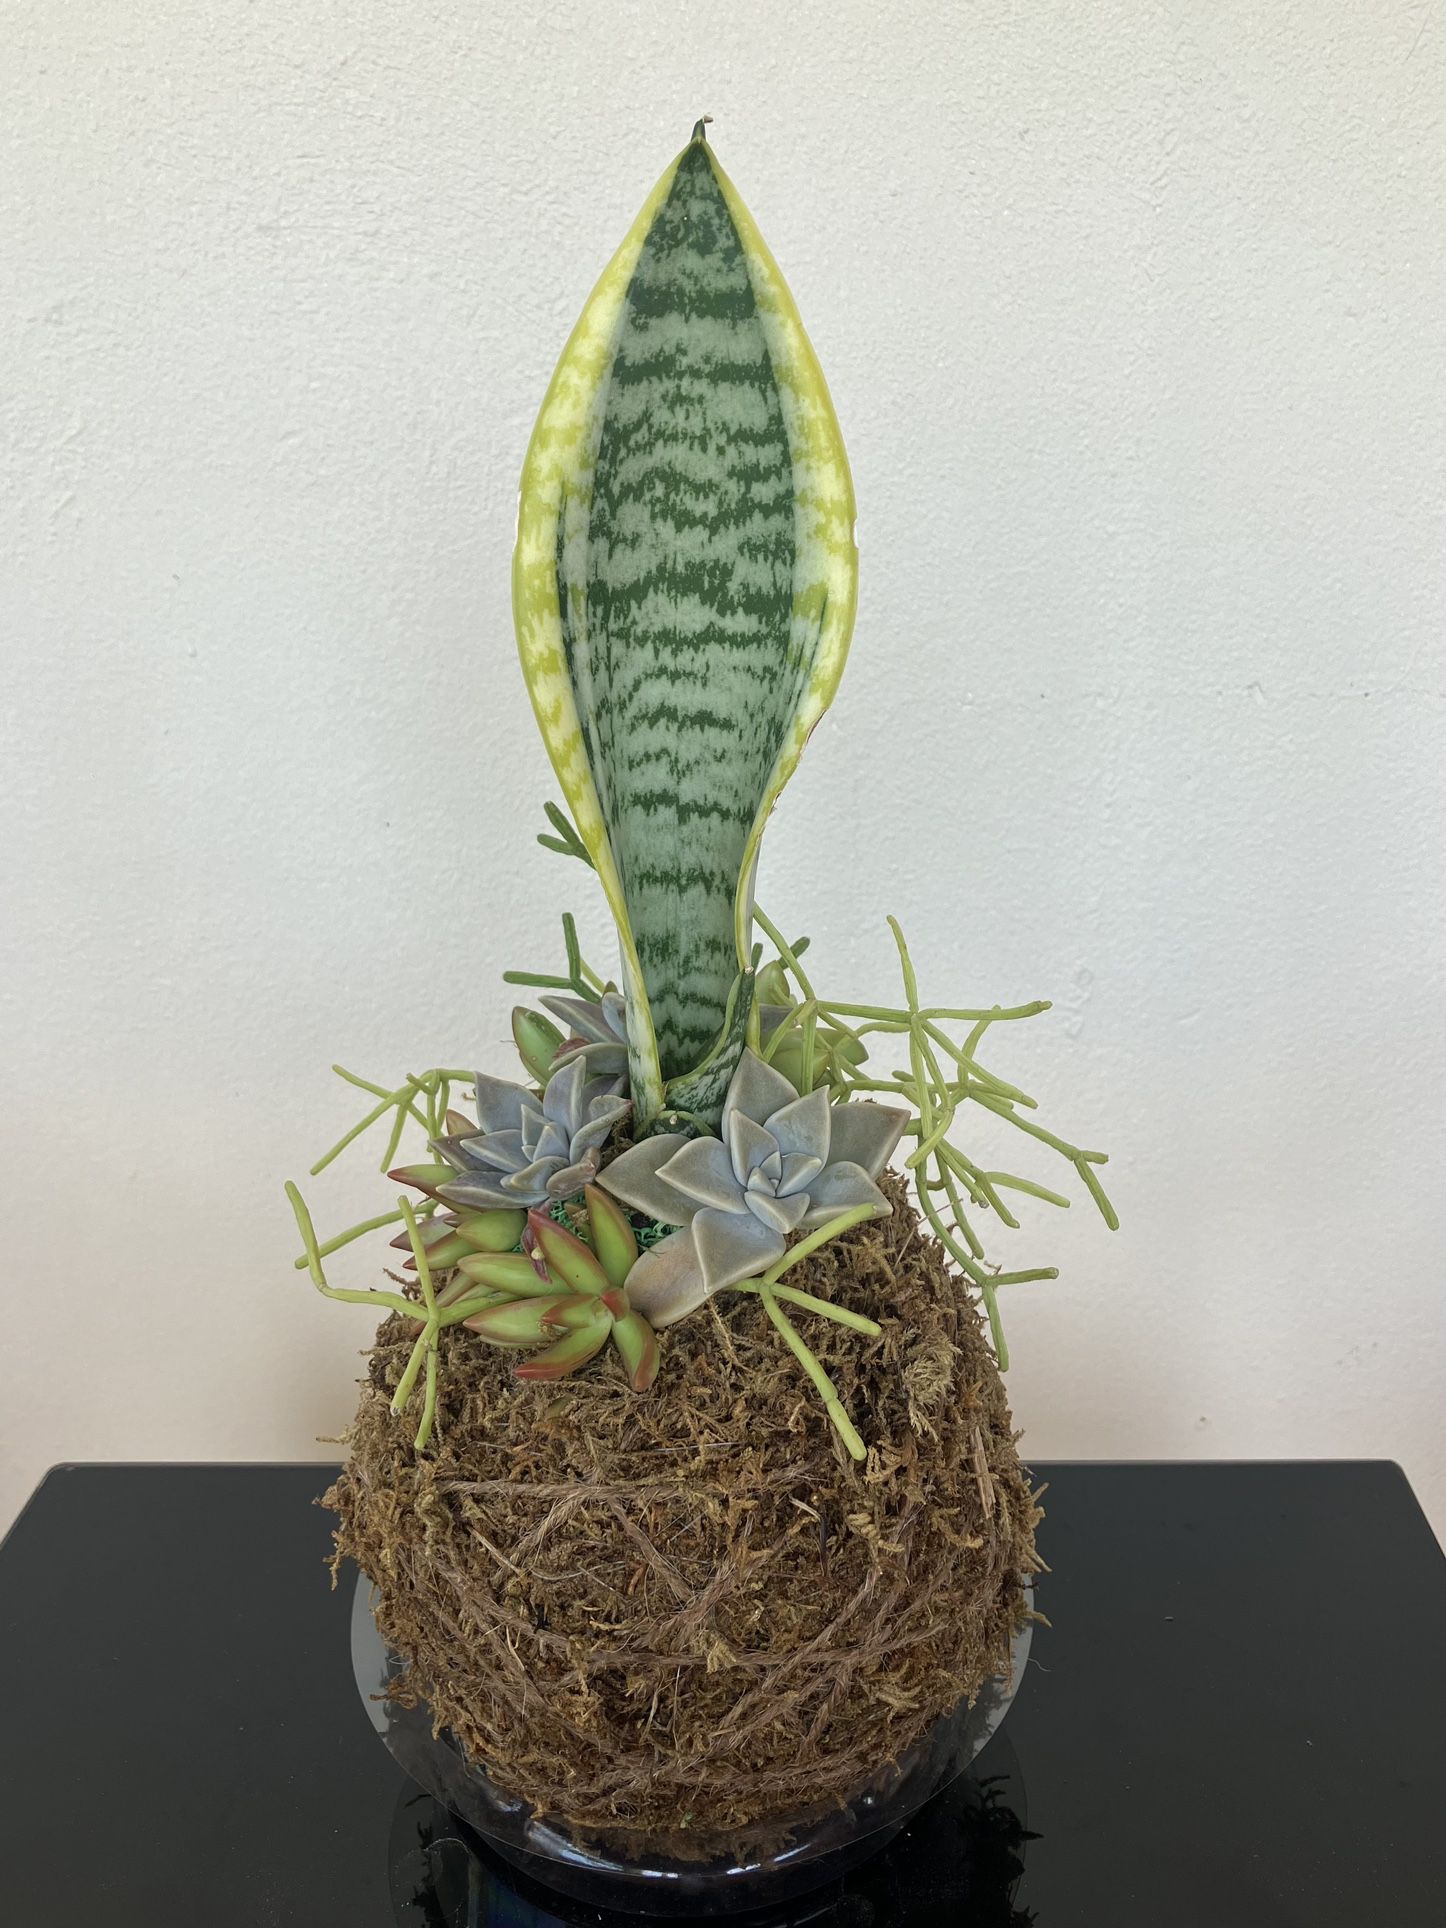 Plant Ornament- Adorno De Planta